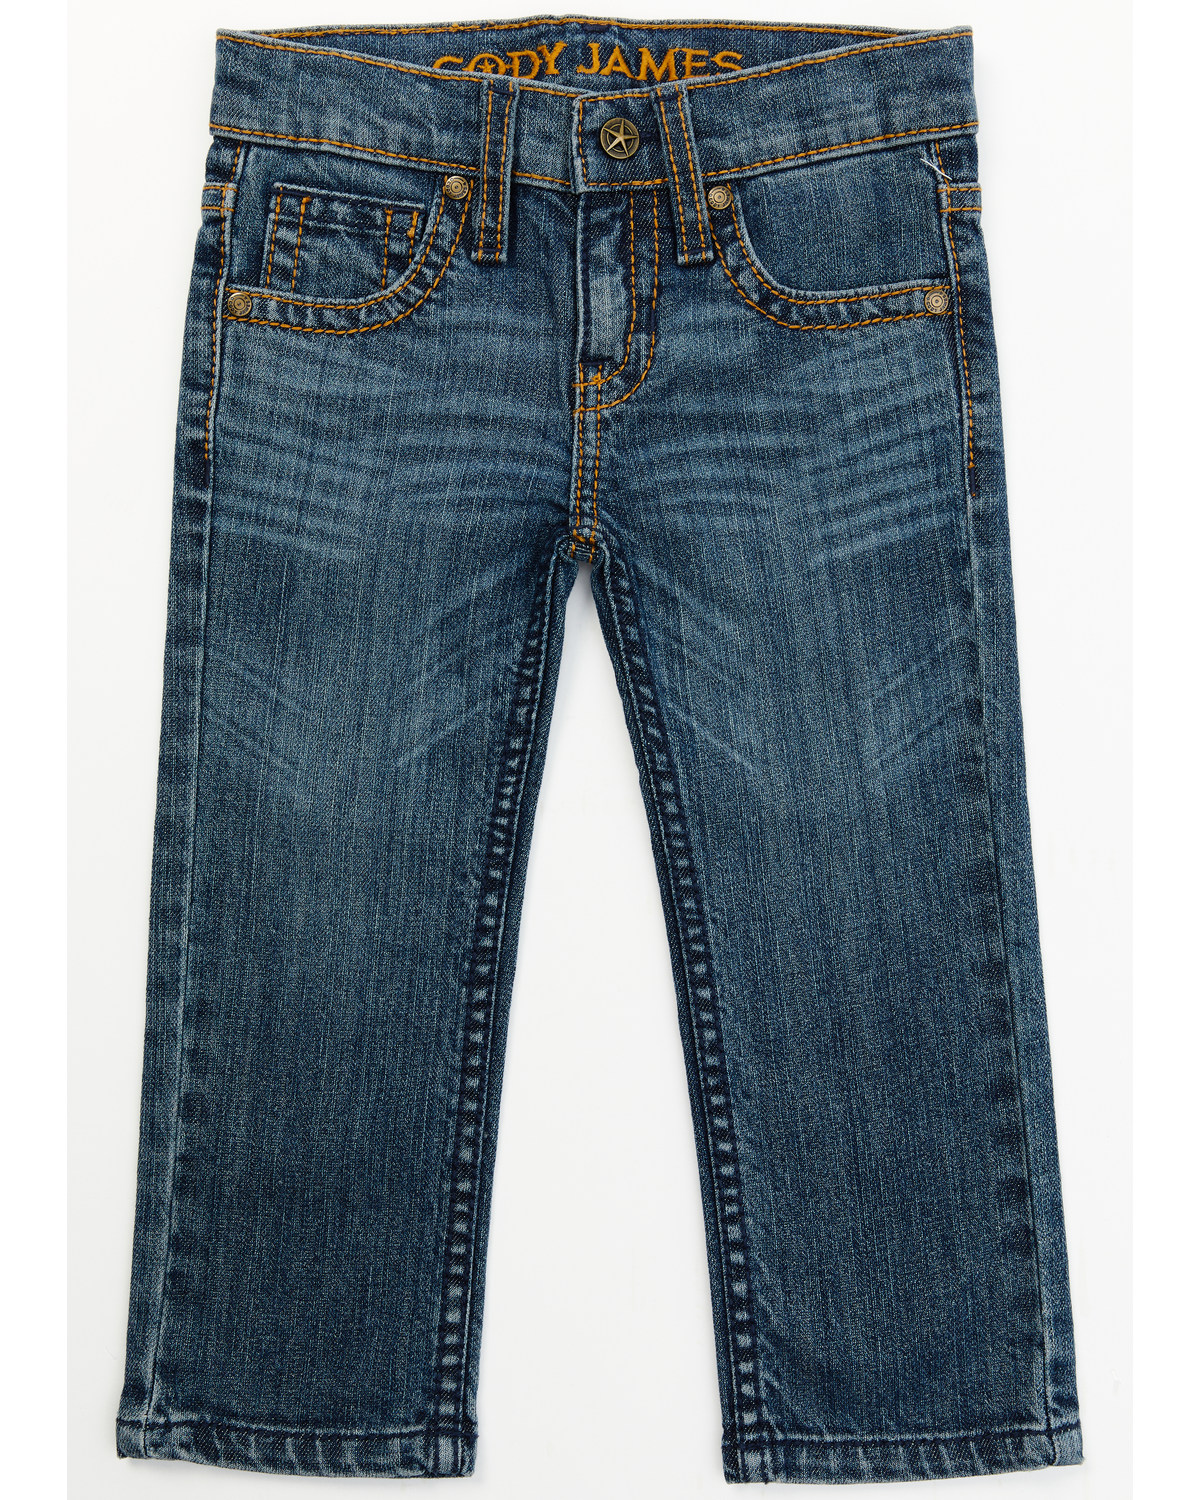 Cody James Toddler Boys' Dark Wash Equalizer Slim Straight Jeans